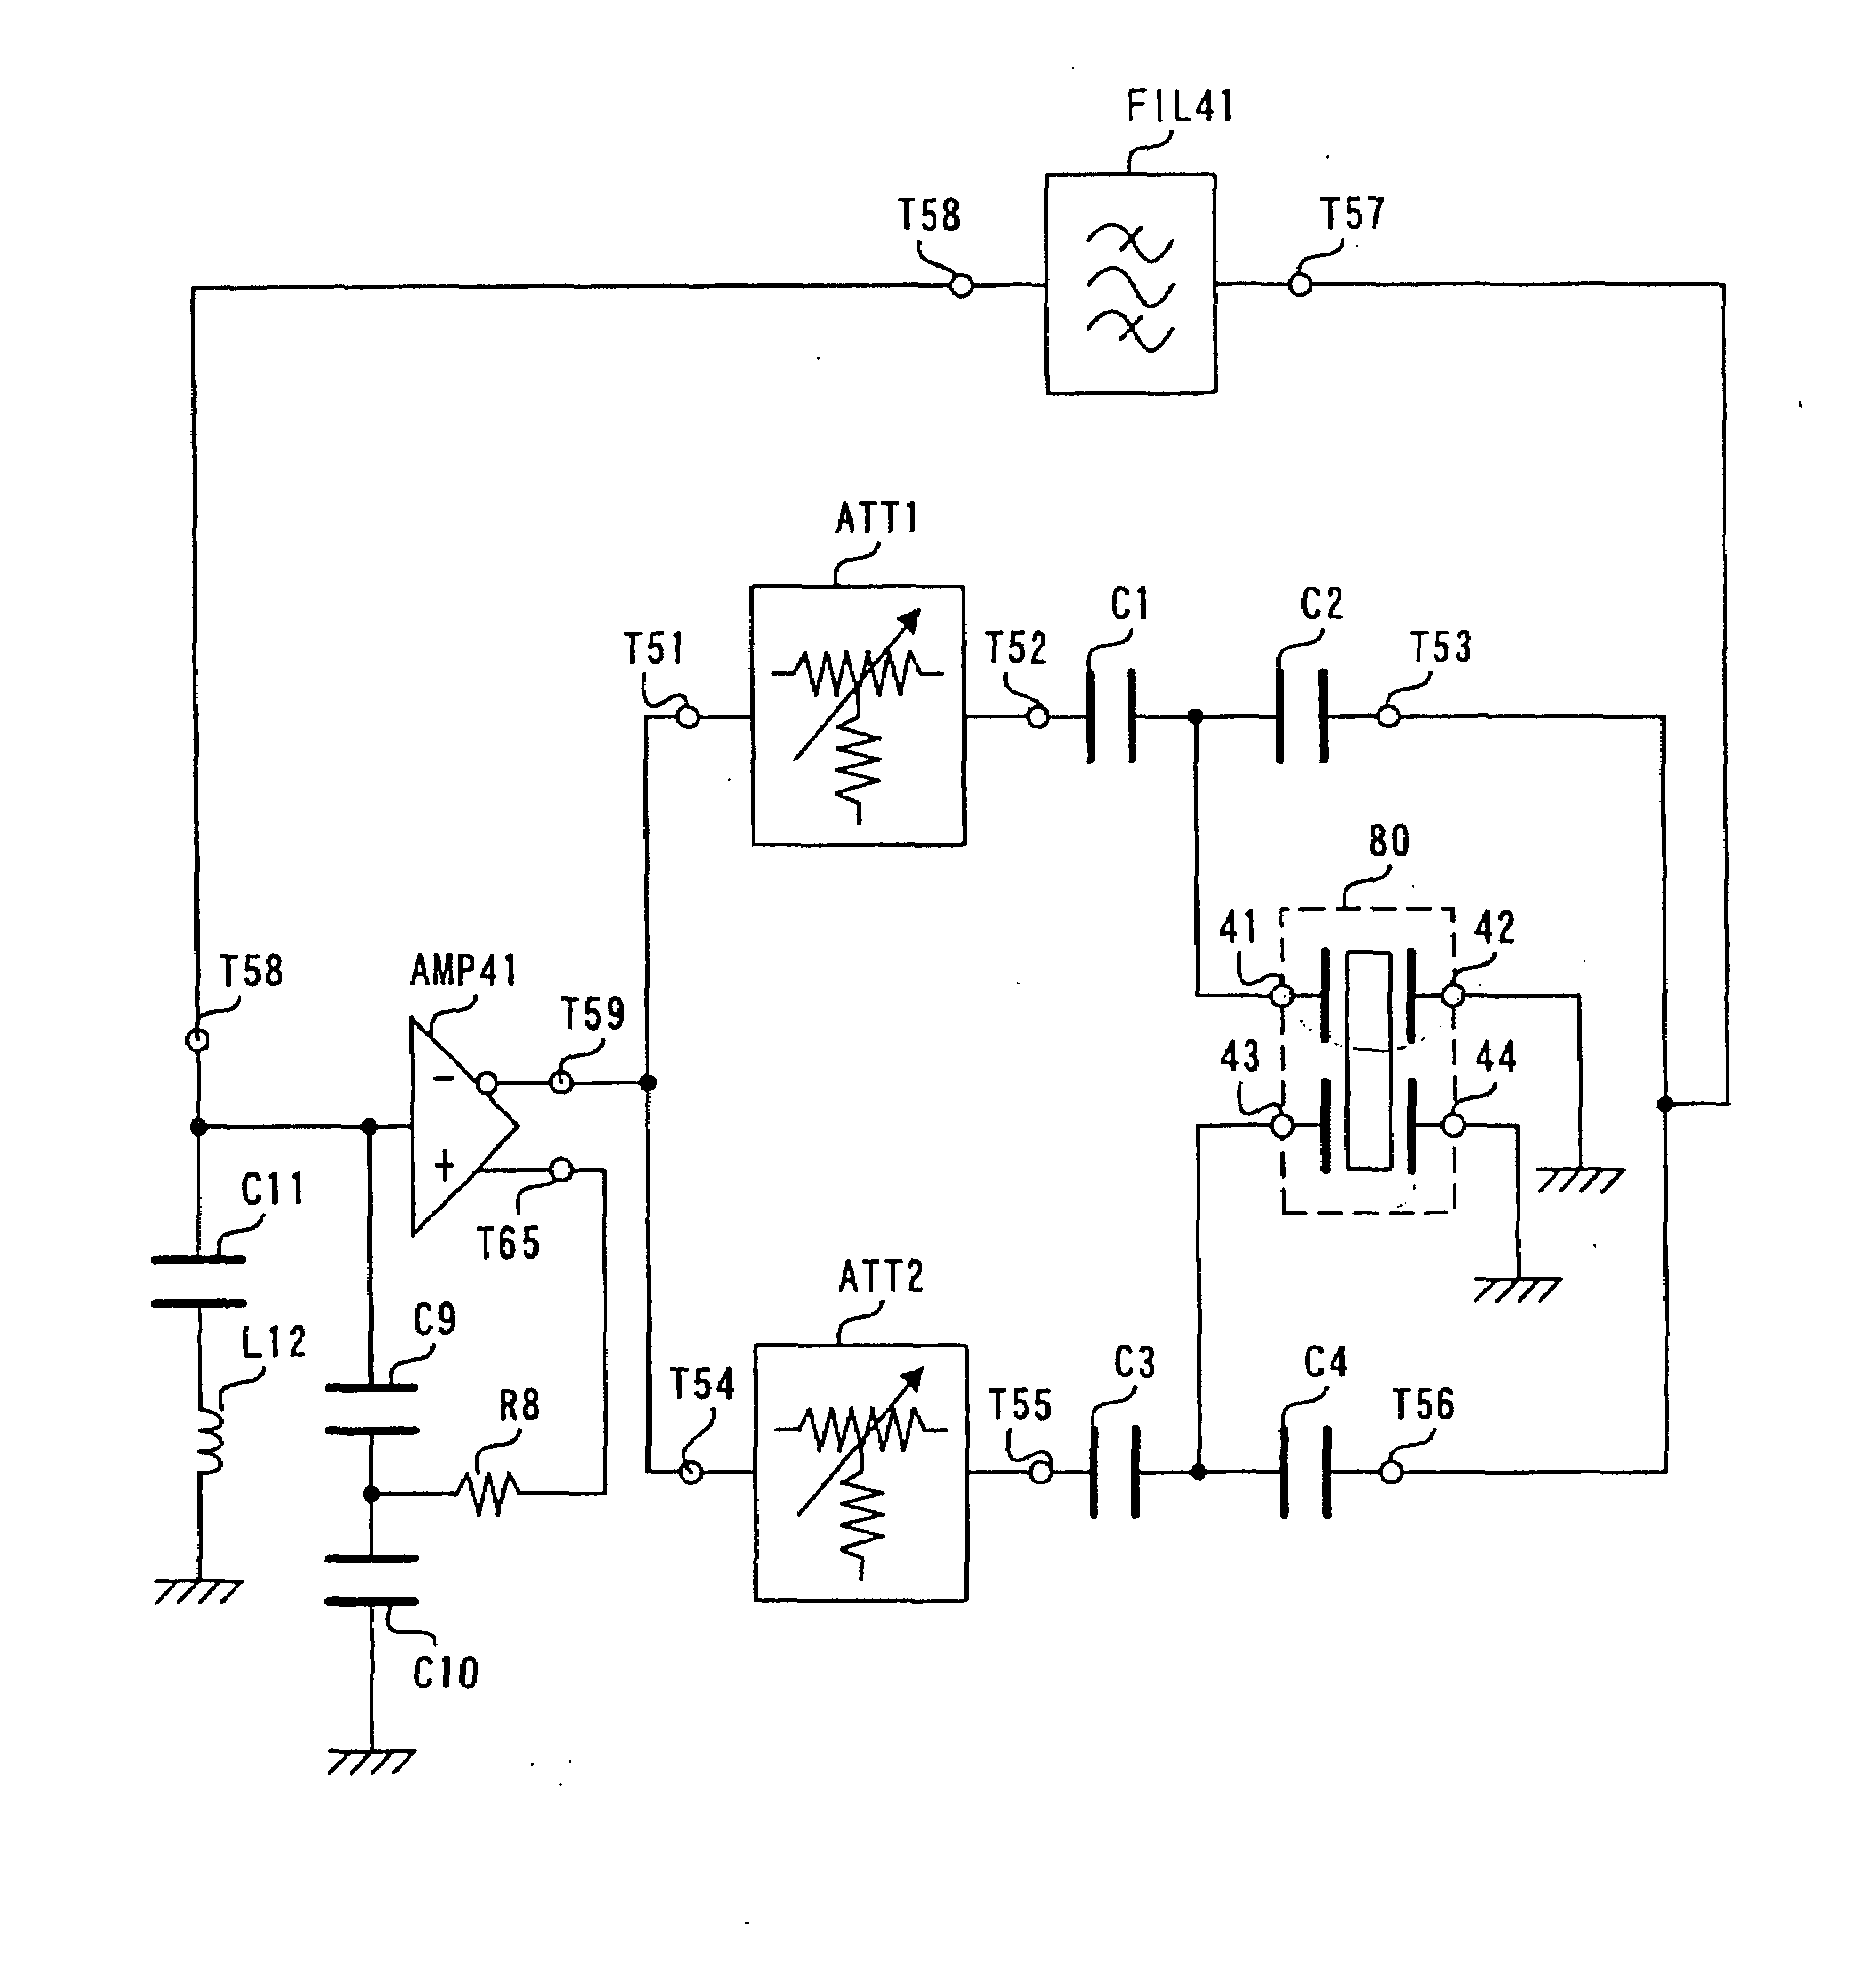 Composite Resonance Circuit and Oscillation Circuit Using the Circuit